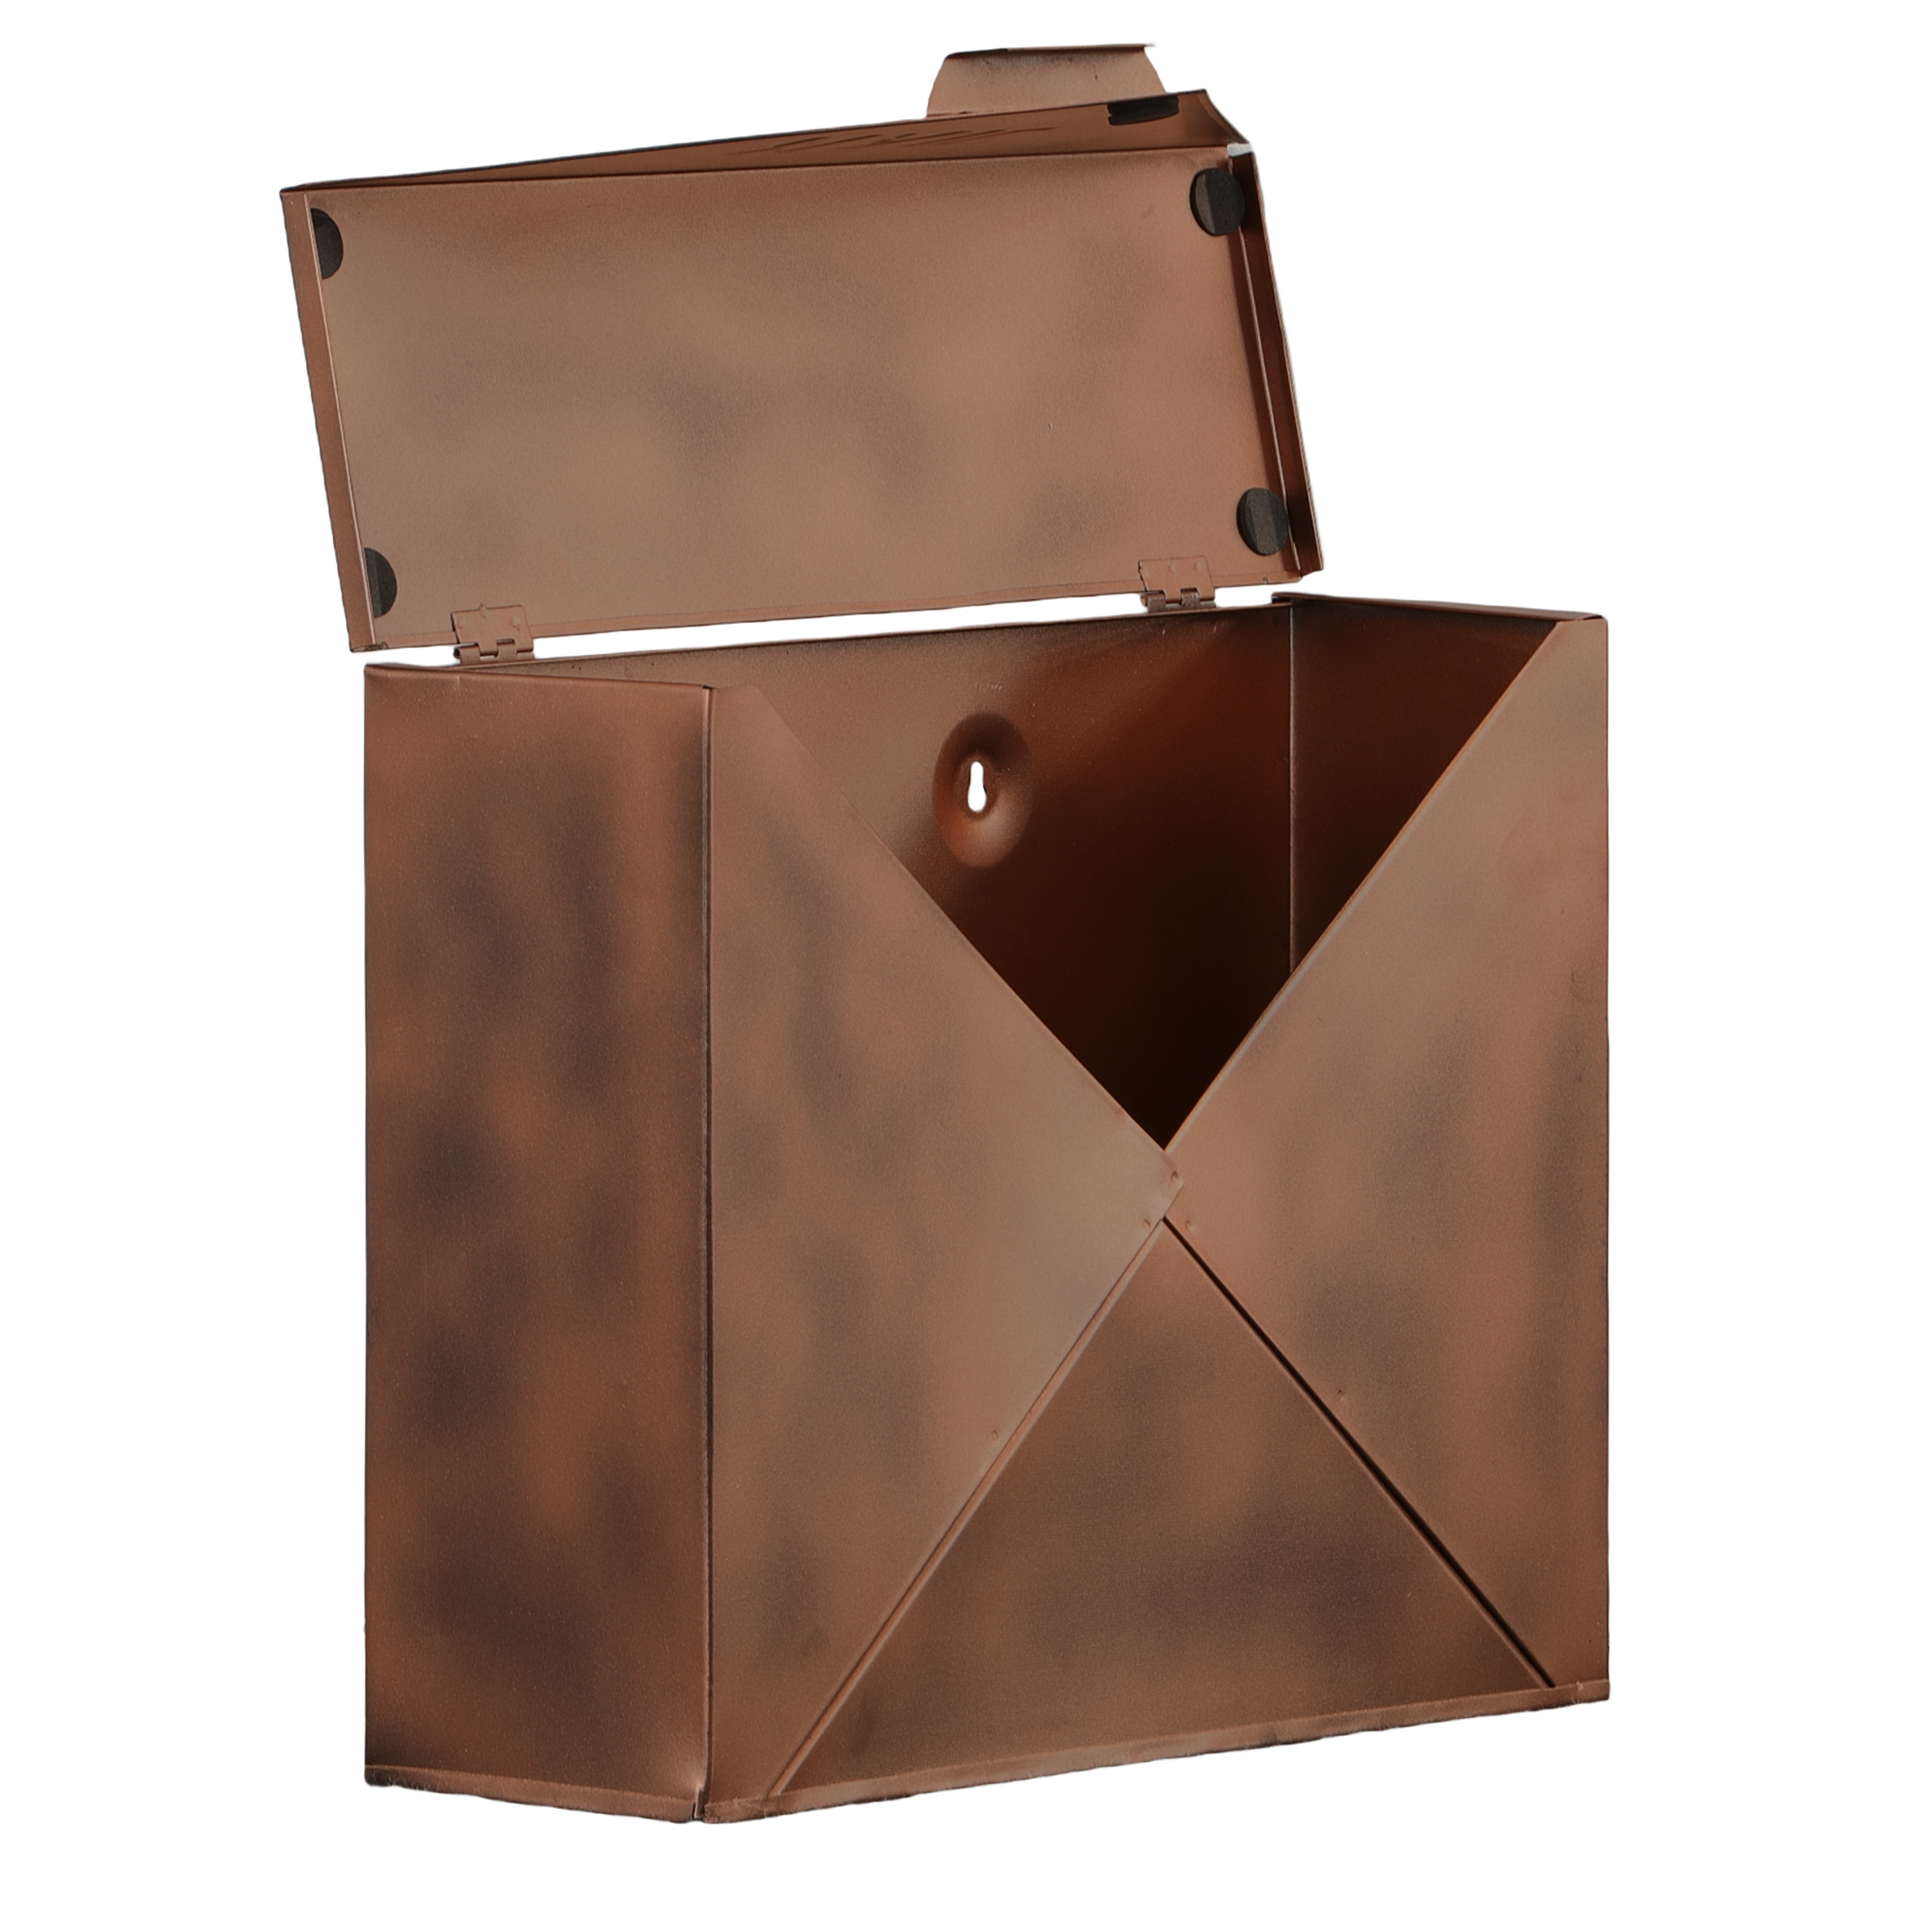 Envelope Shaped Wall Mount Metal Mail Box, Copper- Saltoro Sherpi